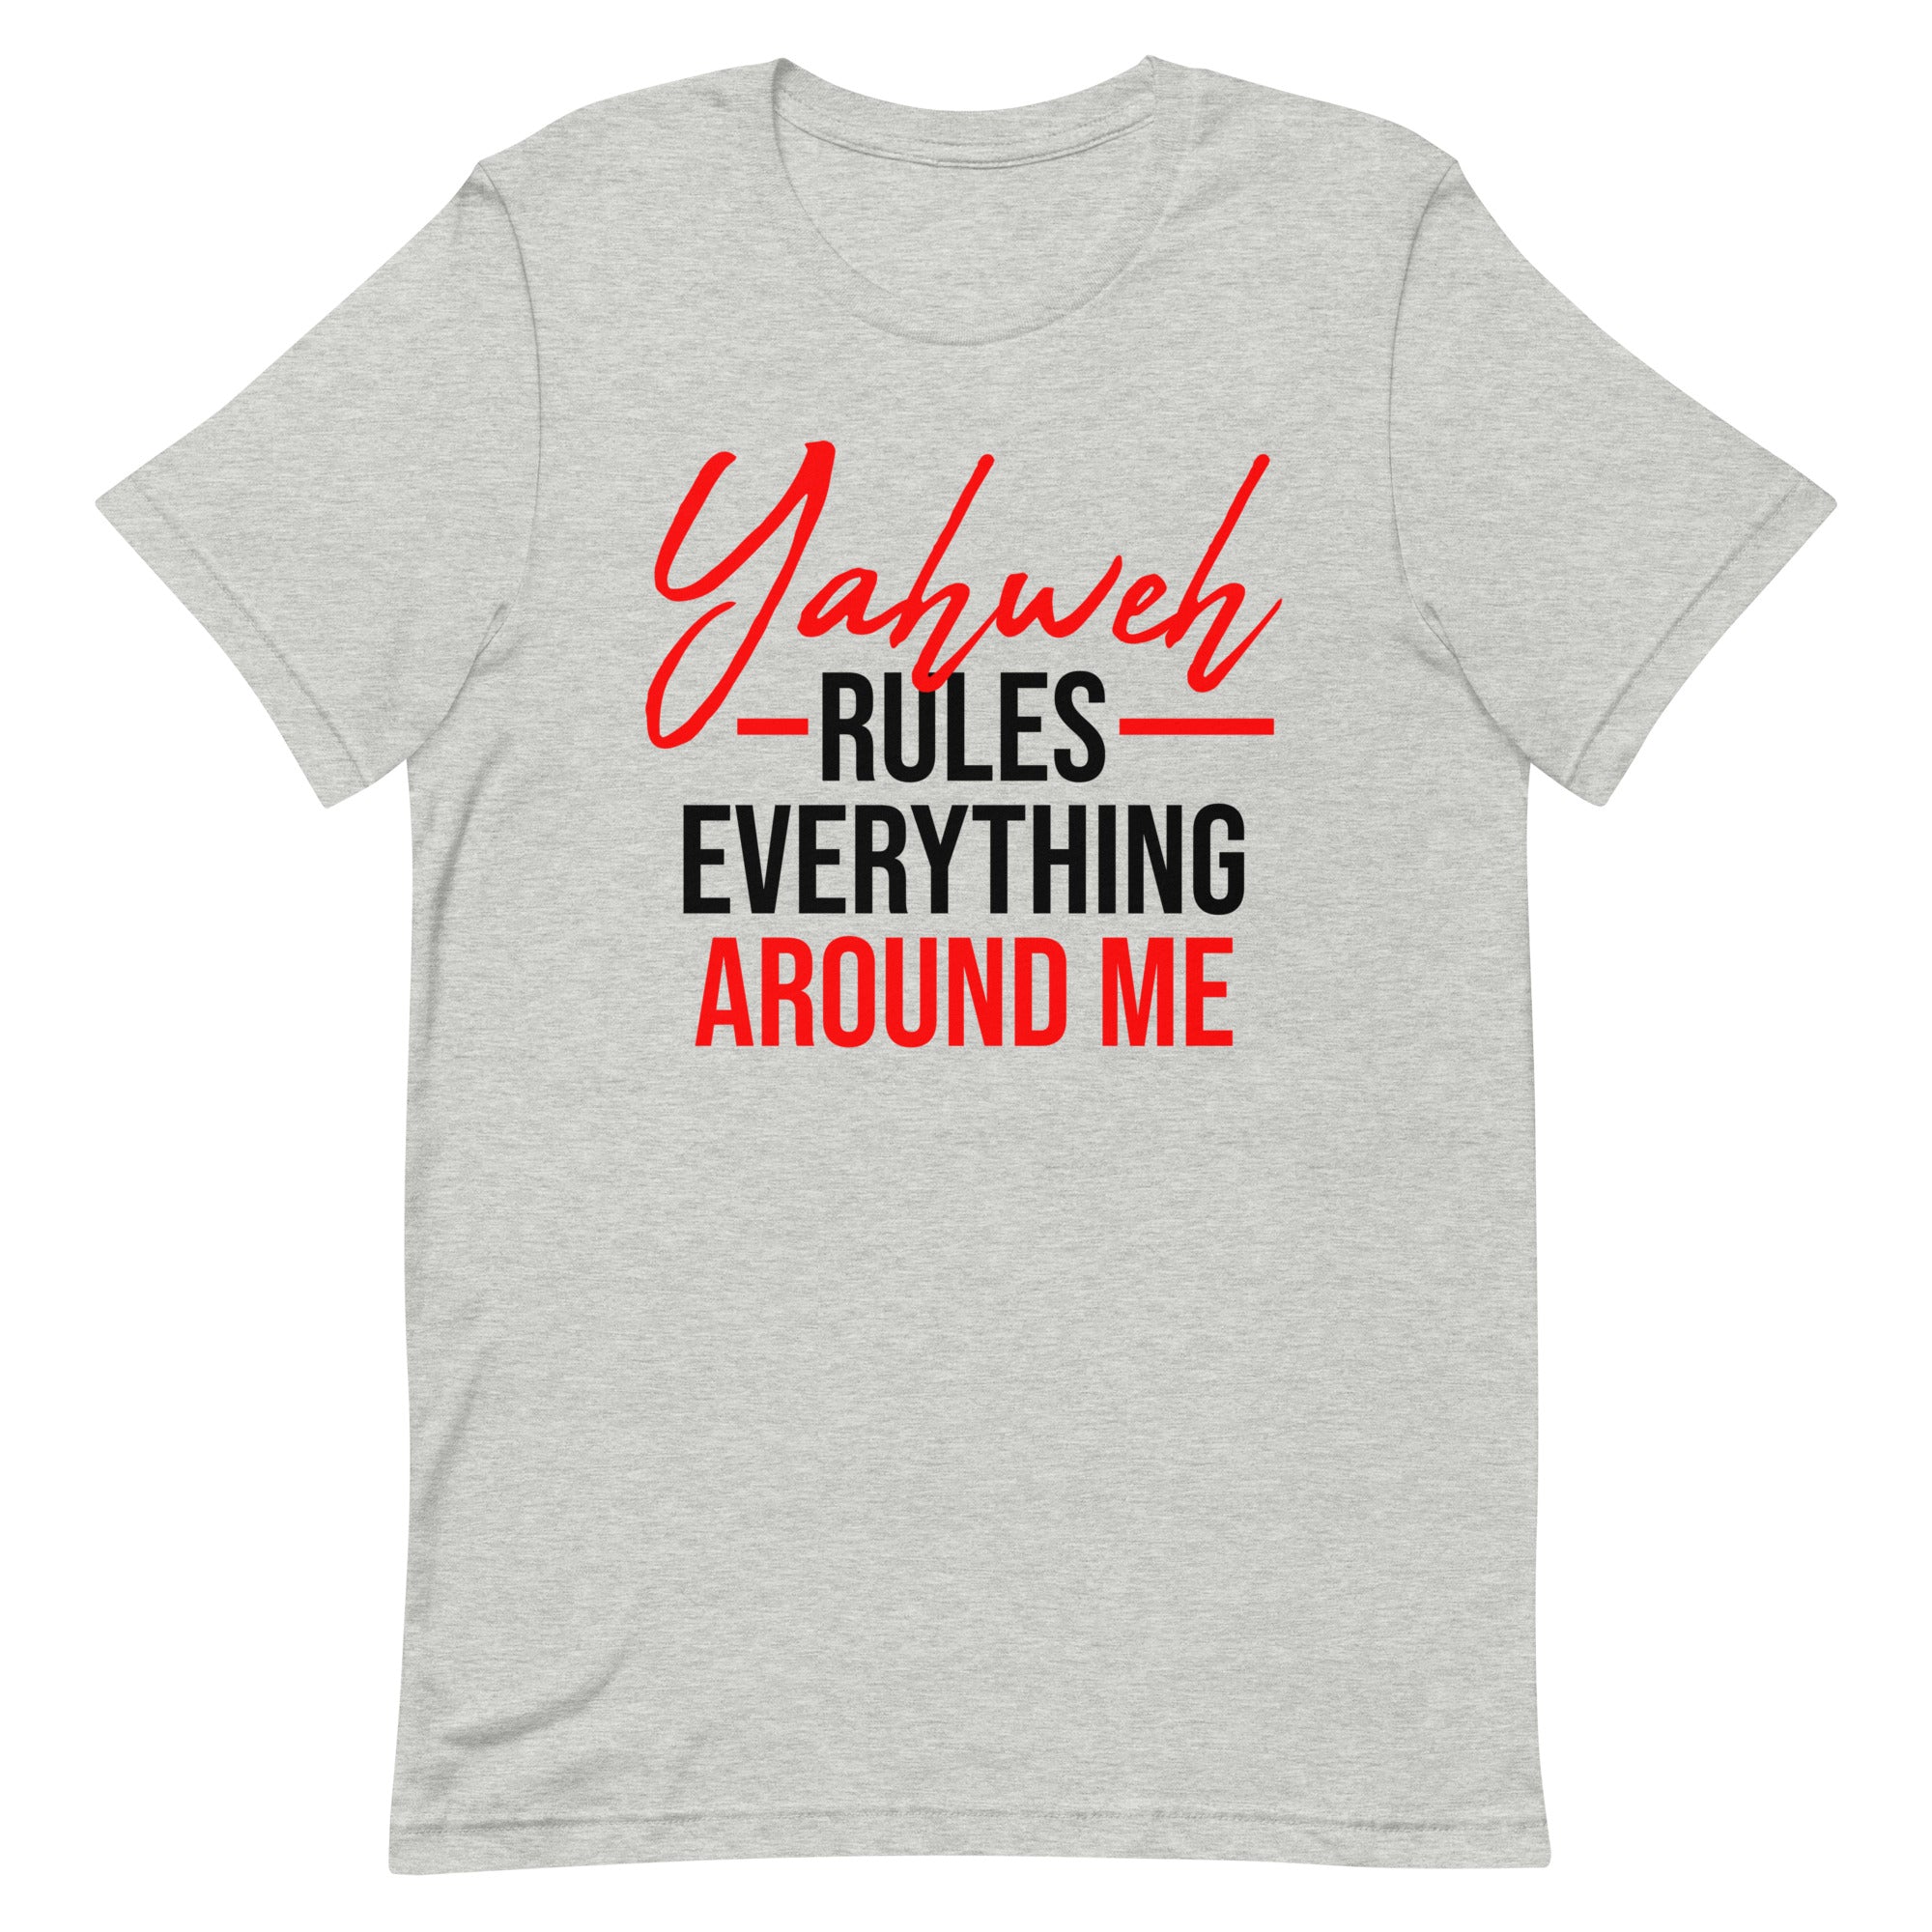 Yahweh Rules Everything Around Me Unisex T-shirt